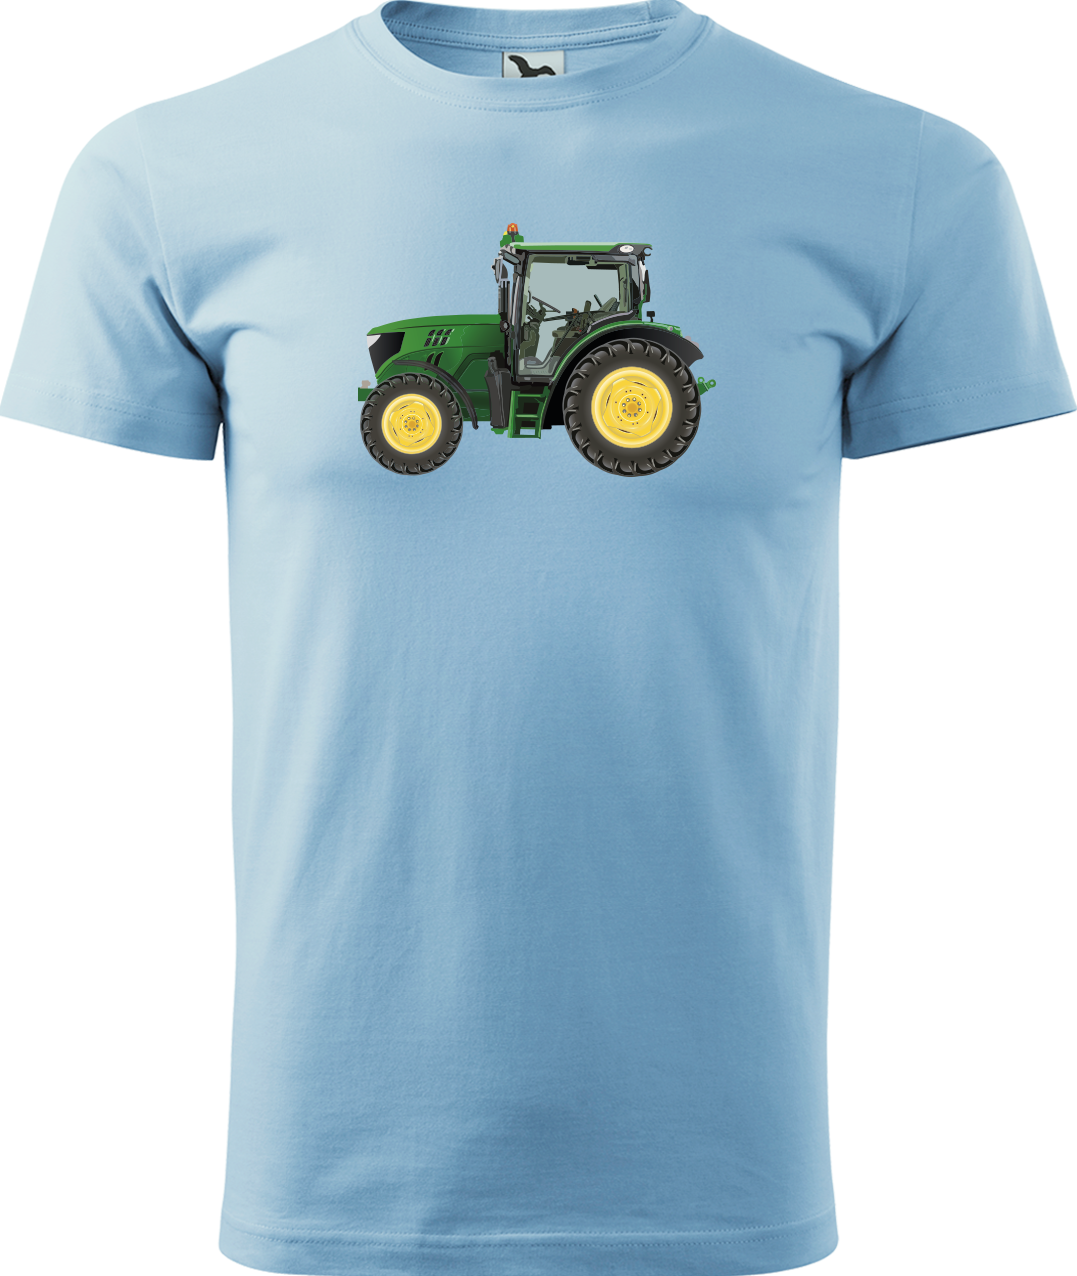 Tričko s traktorem - Zelený traktor Velikost: M, Barva: Nebesky modrá (15)